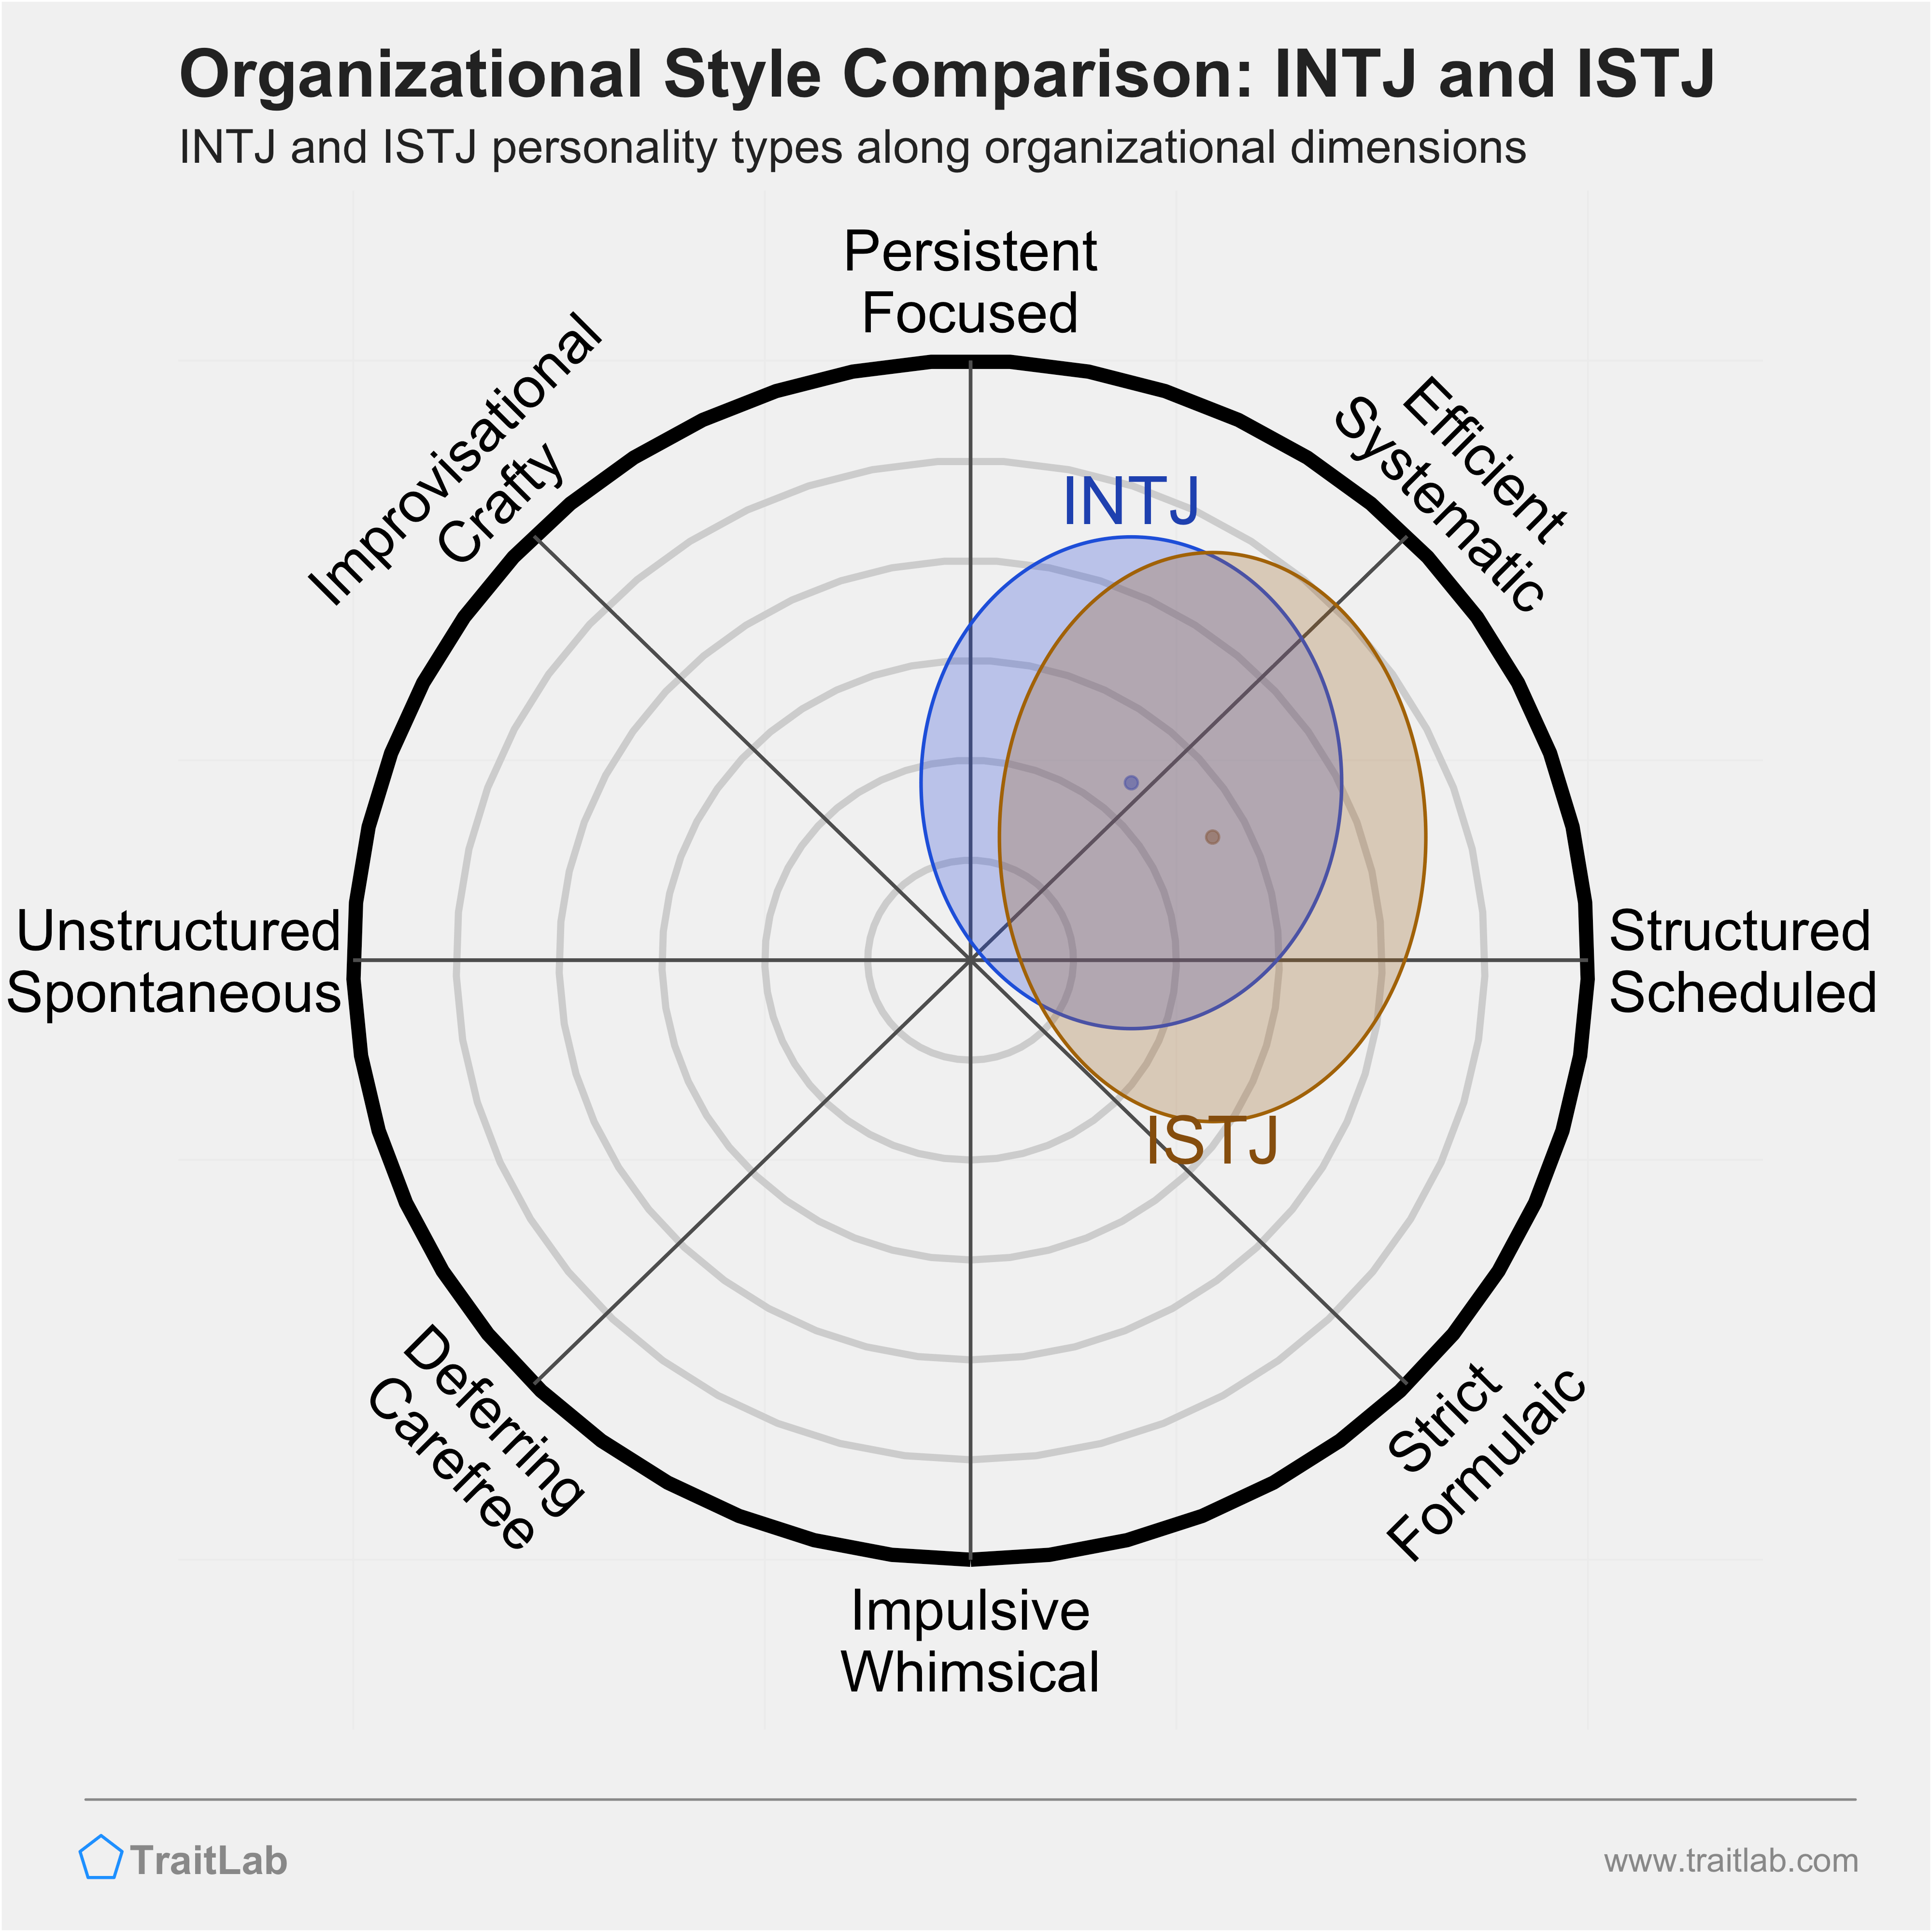 INTJ and ISTJ comparison across organizational dimensions